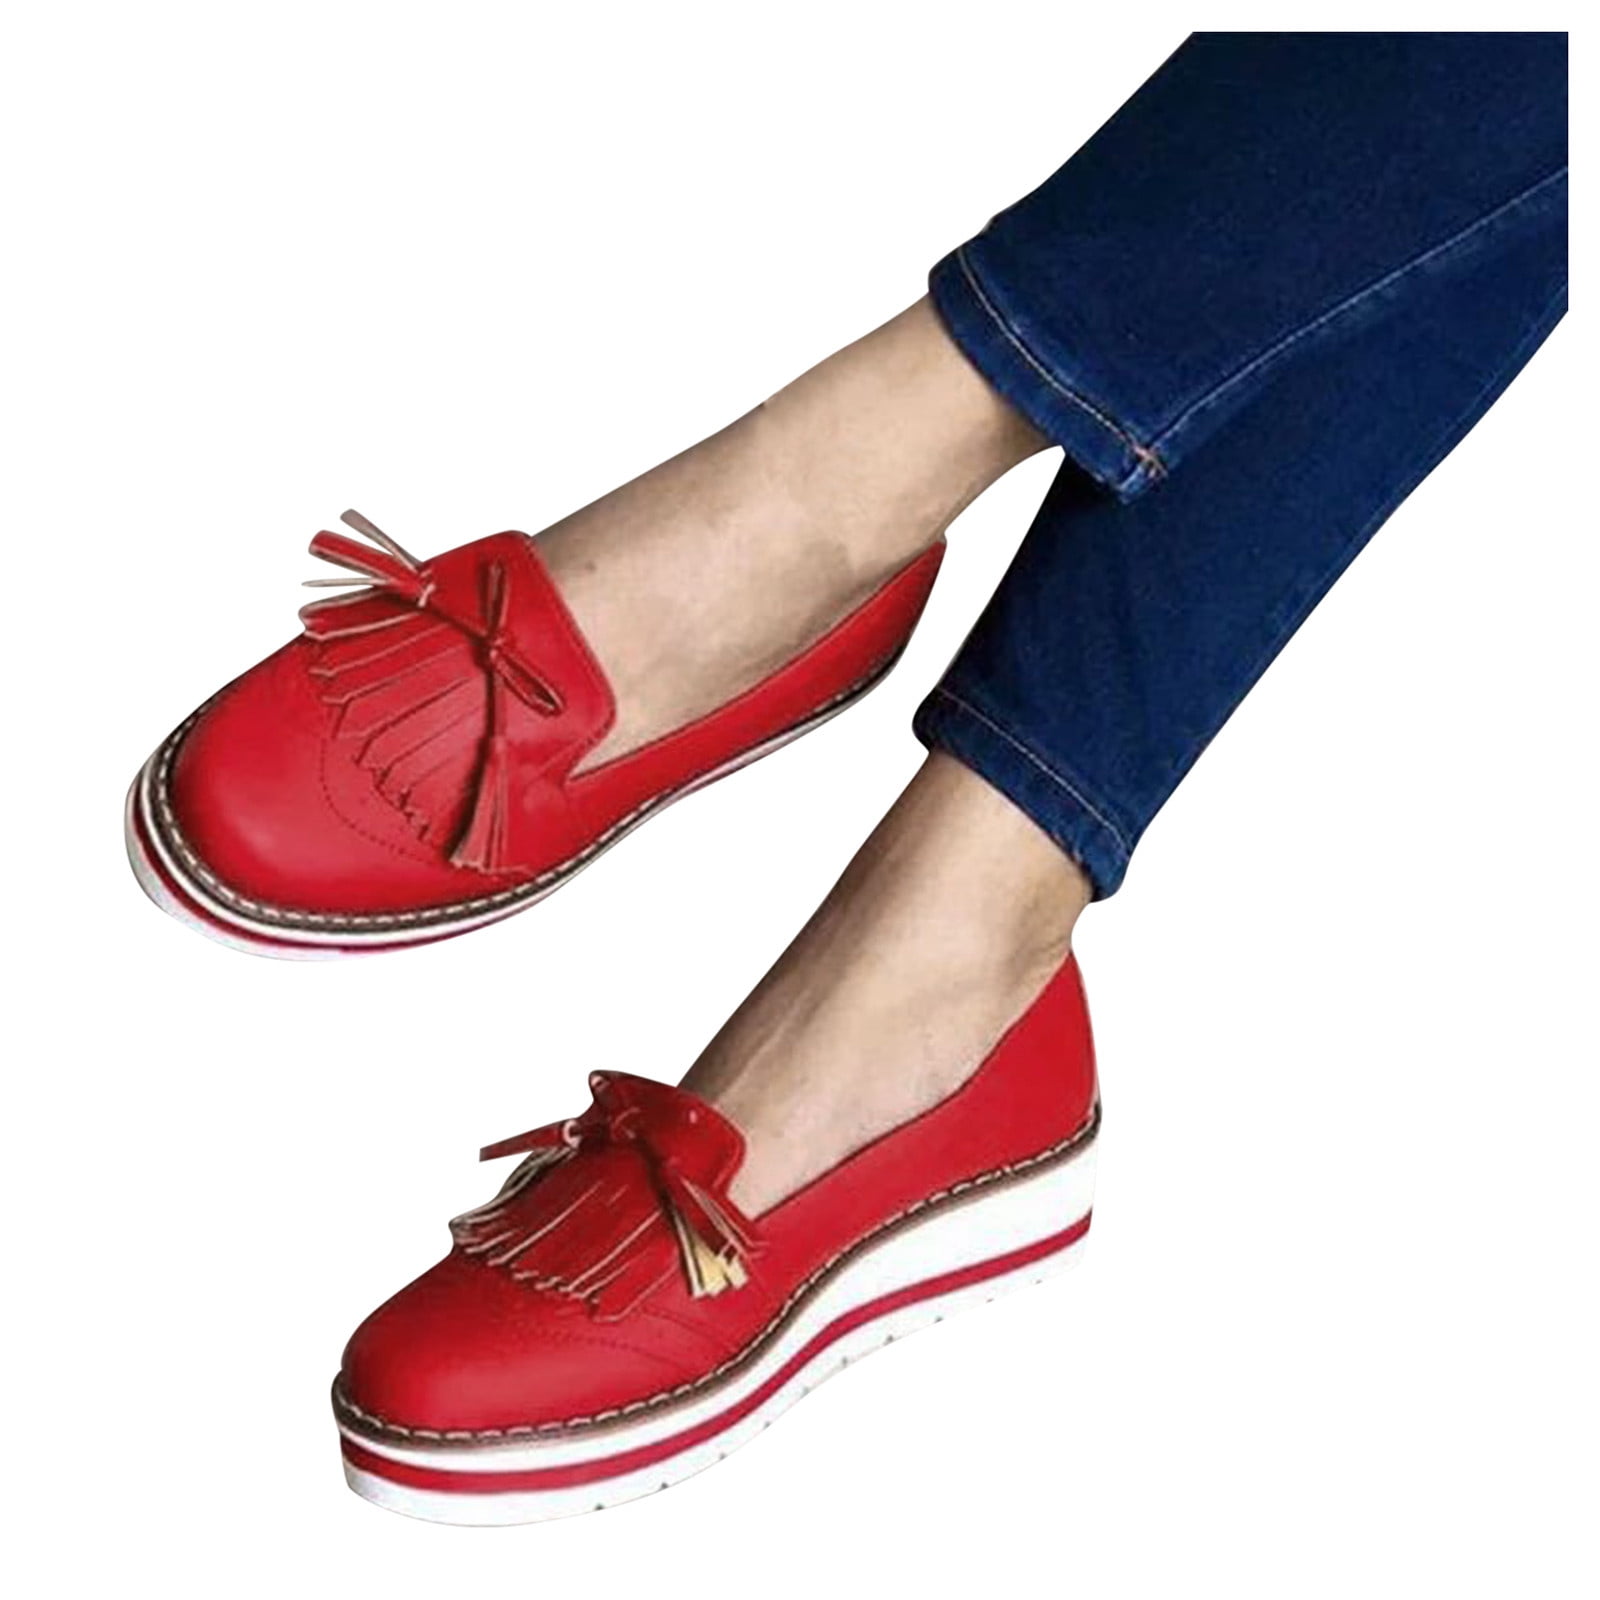 eczipvz Casual Shoes for Women Women's Canvas Slip on Casual Slip on ...